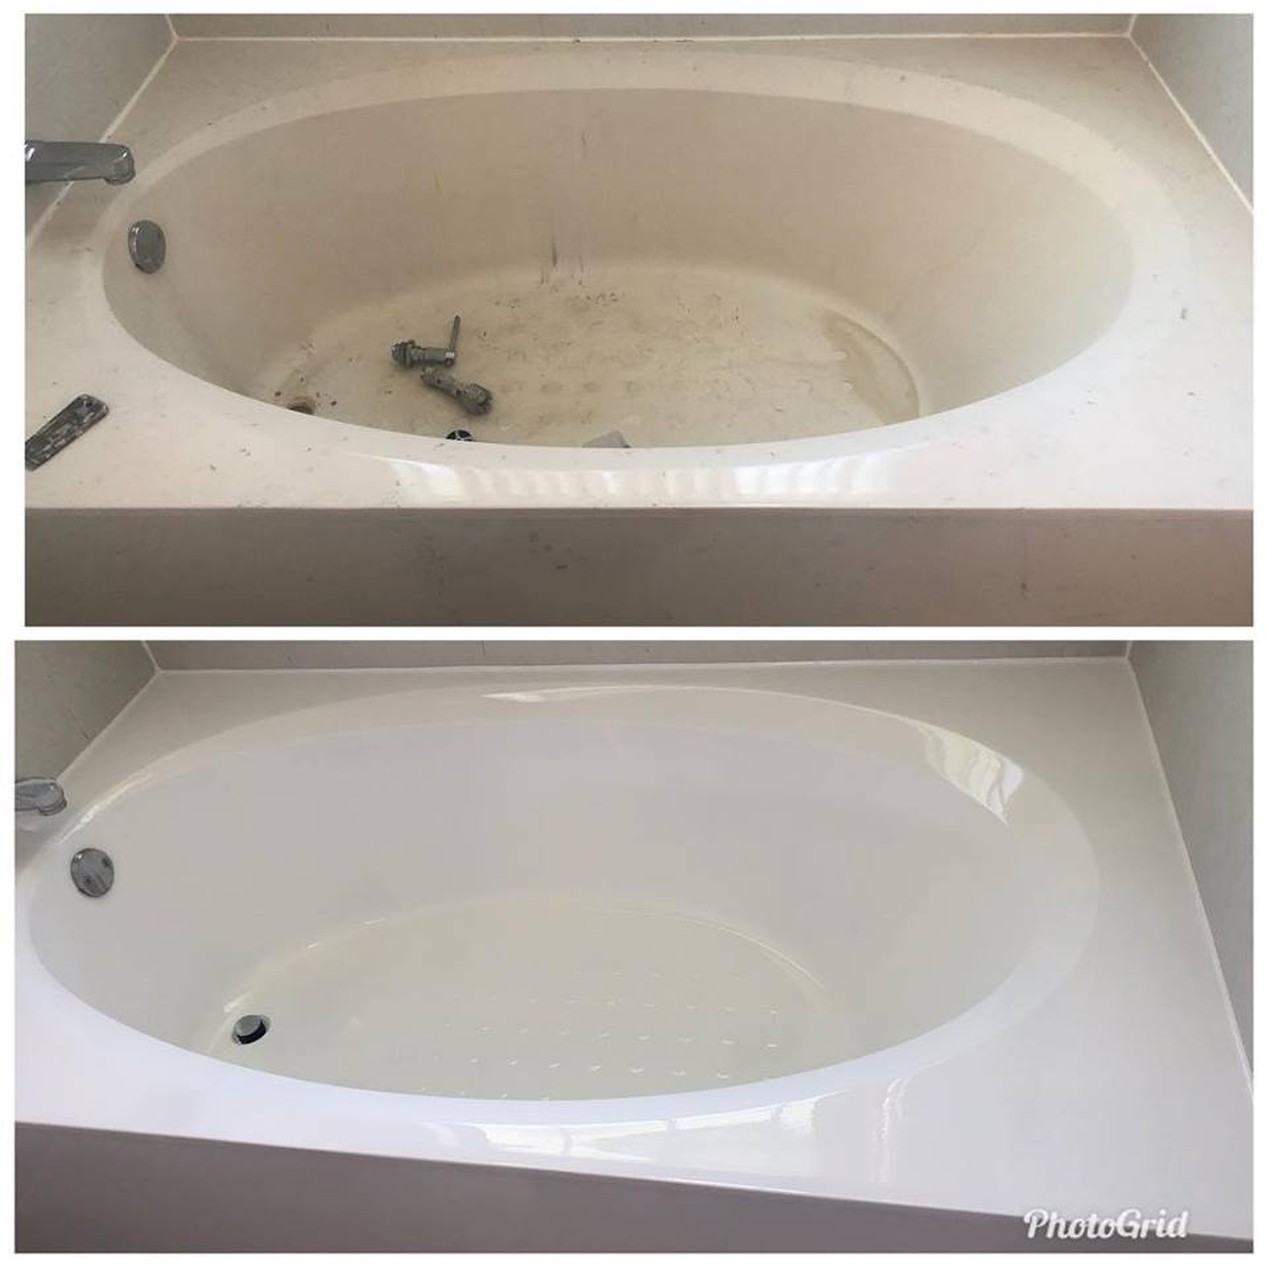 Bathtub Refinishing-Before & After | Bathtub Master Refinishing